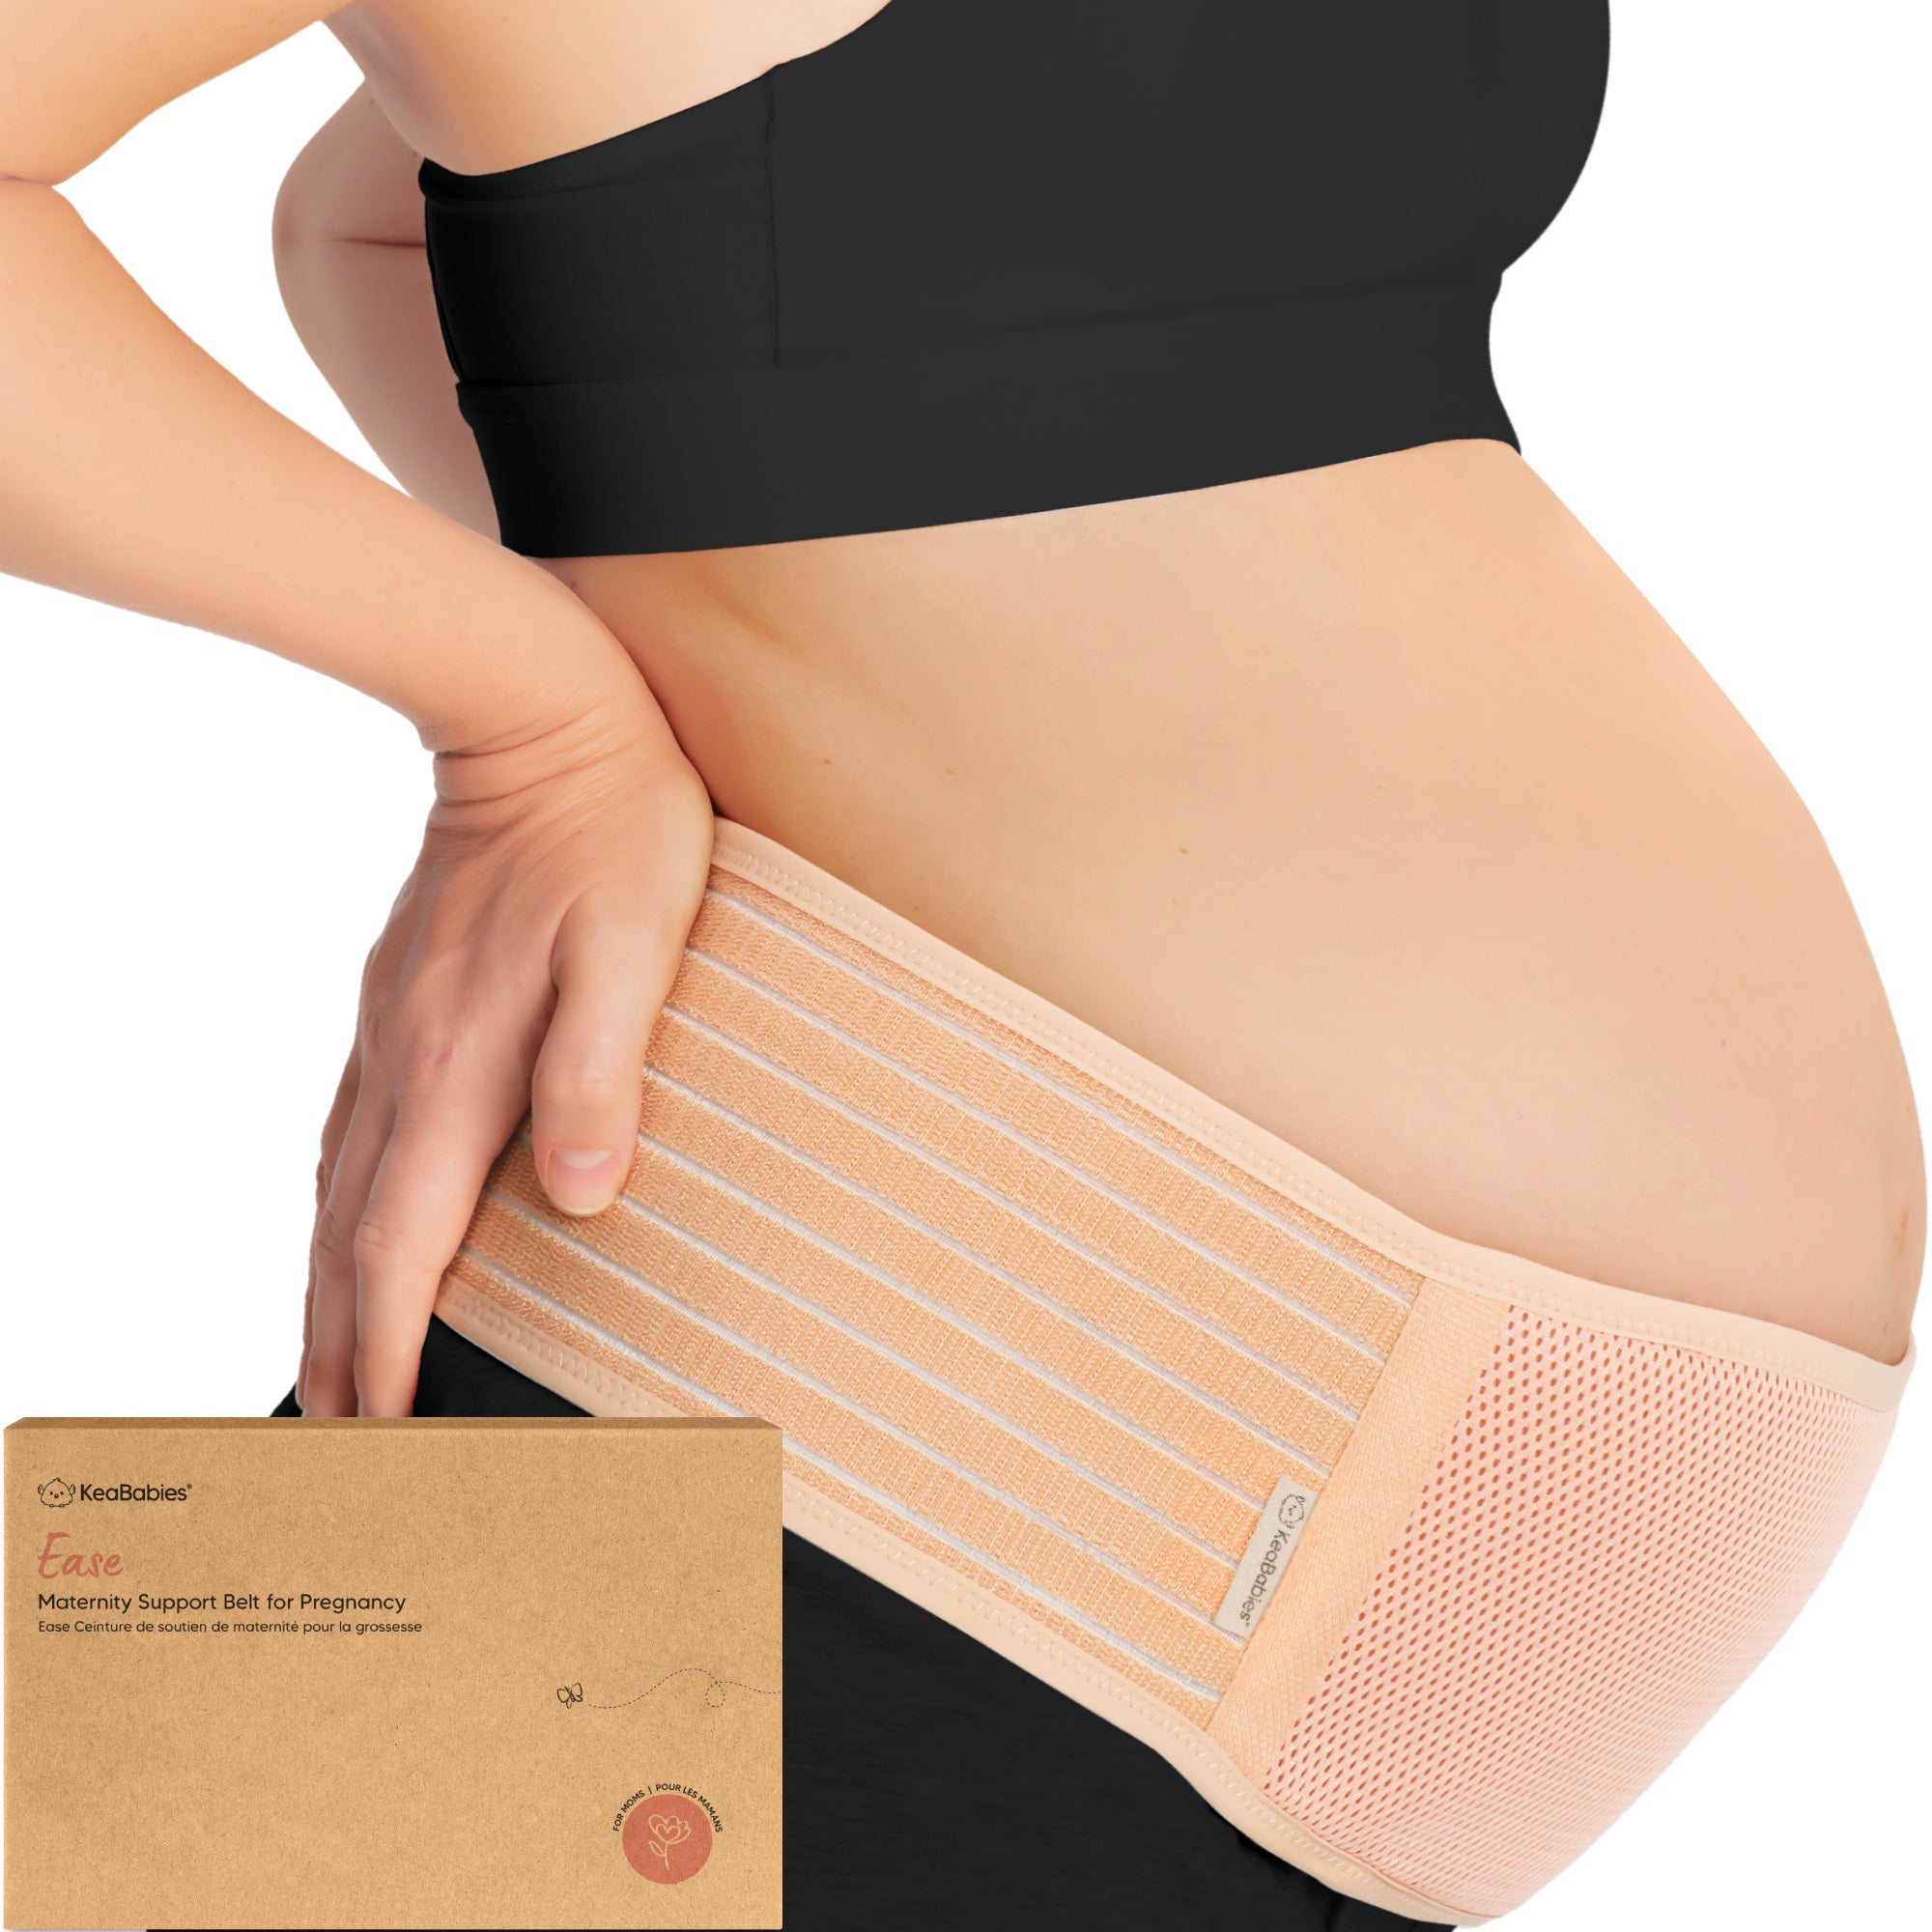 Ease Maternity Support Belt